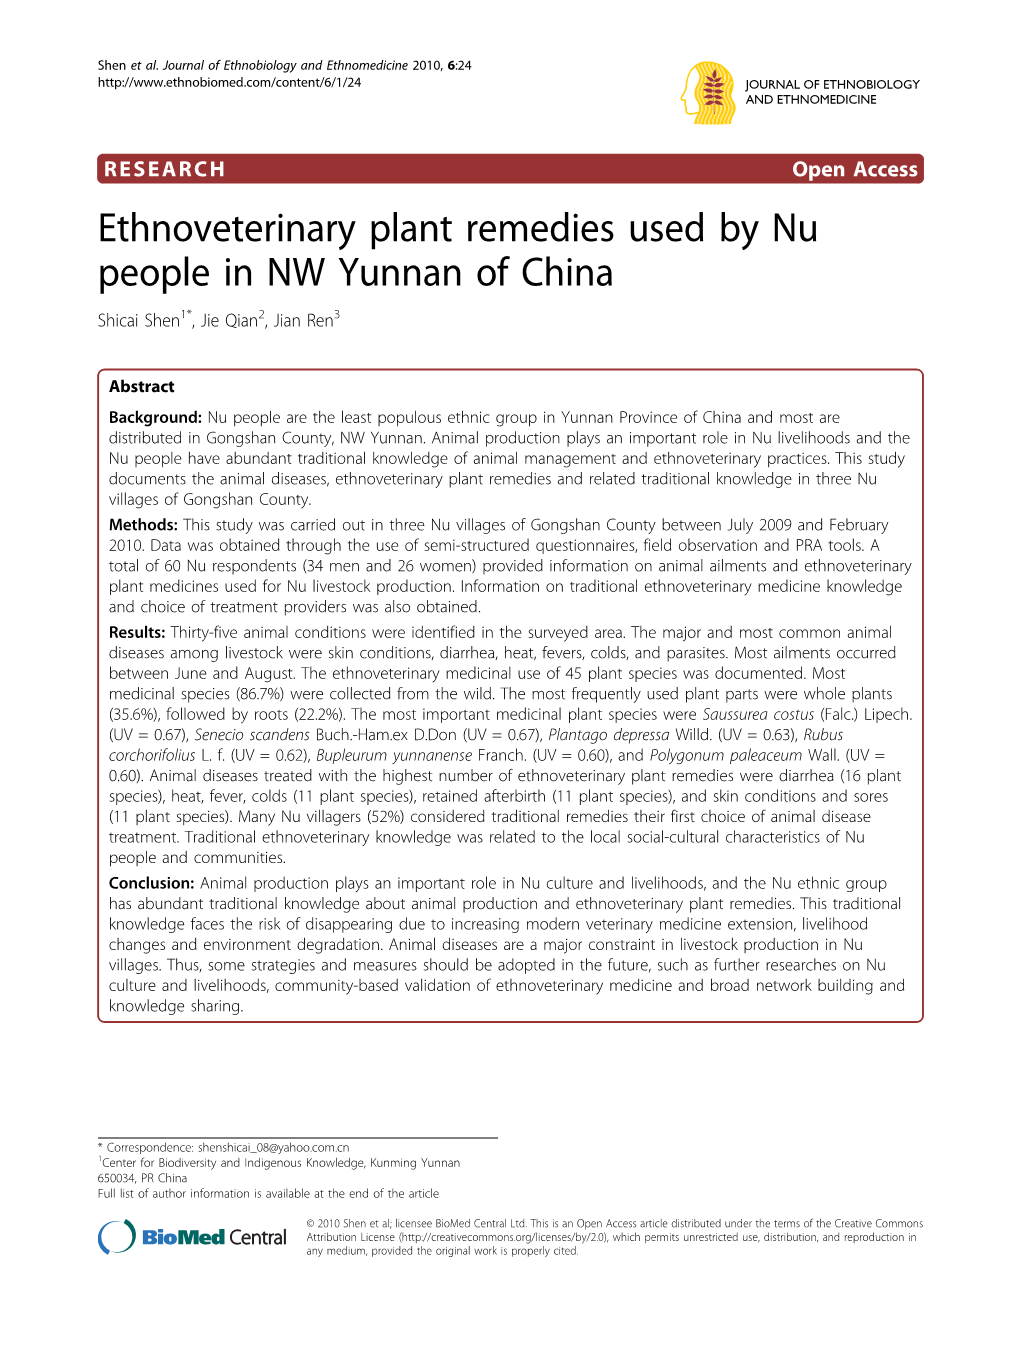 Ethnoveterinary Plant Remedies Used by Nu People in NW Yunnan of China Shicai Shen1*, Jie Qian2, Jian Ren3